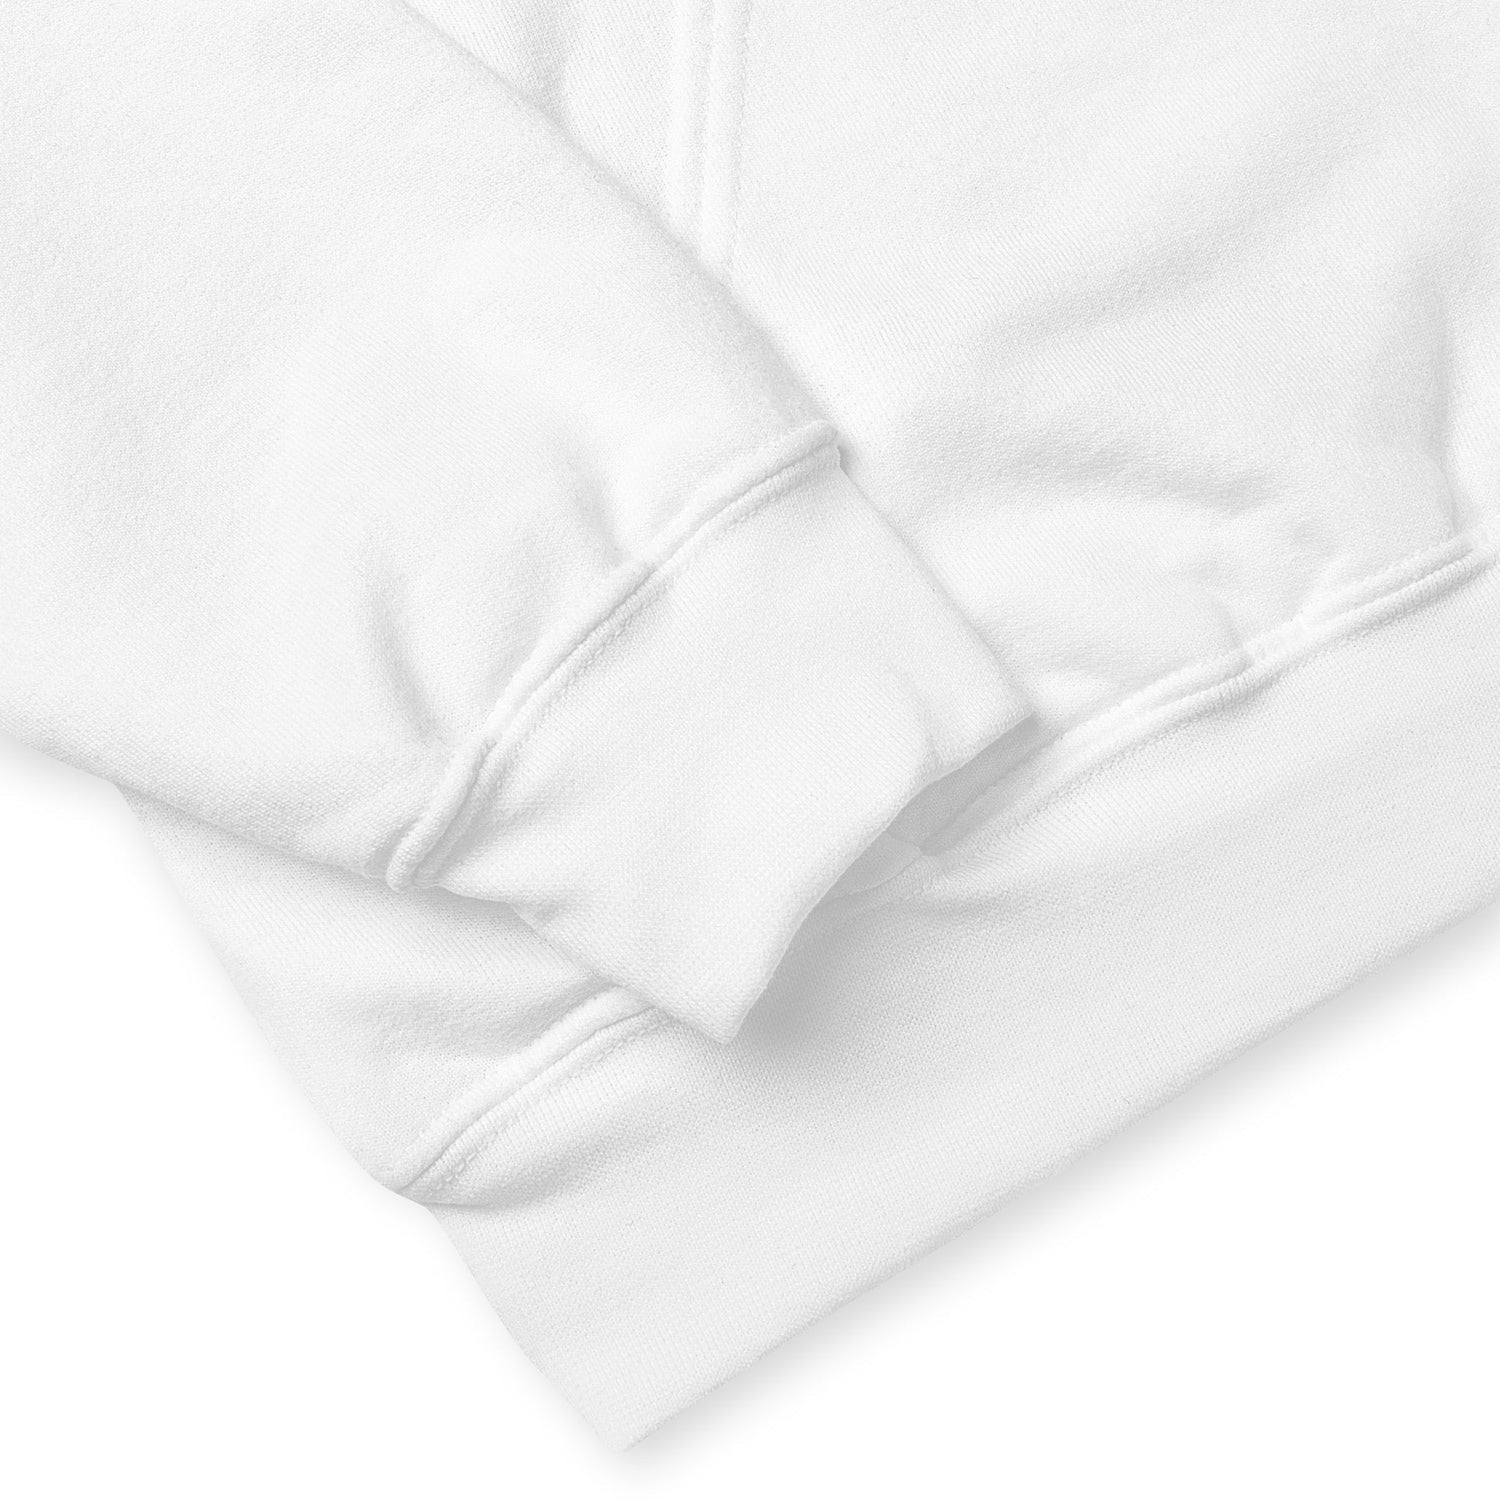 iCarly Logo Hooded Sweatshirt - Paramount Shop